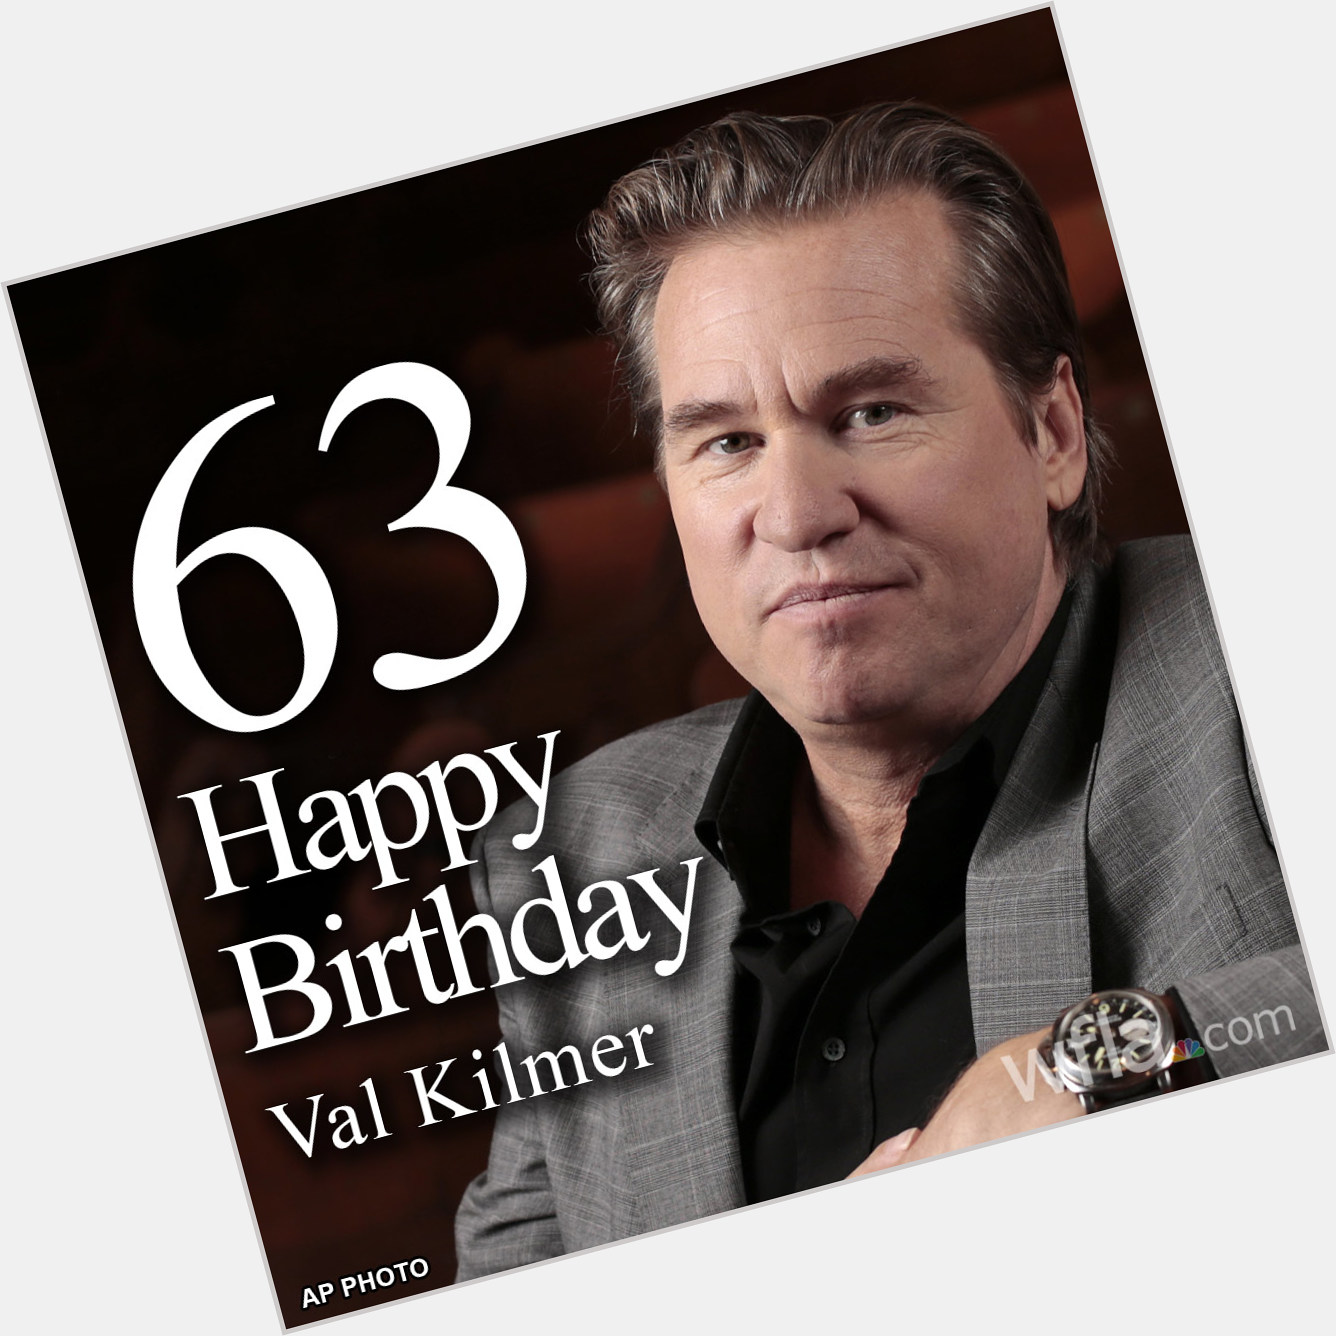 HAPPY BIRTHDAY VAL KILMER The \Top Gun\ actor turns 63 today!  